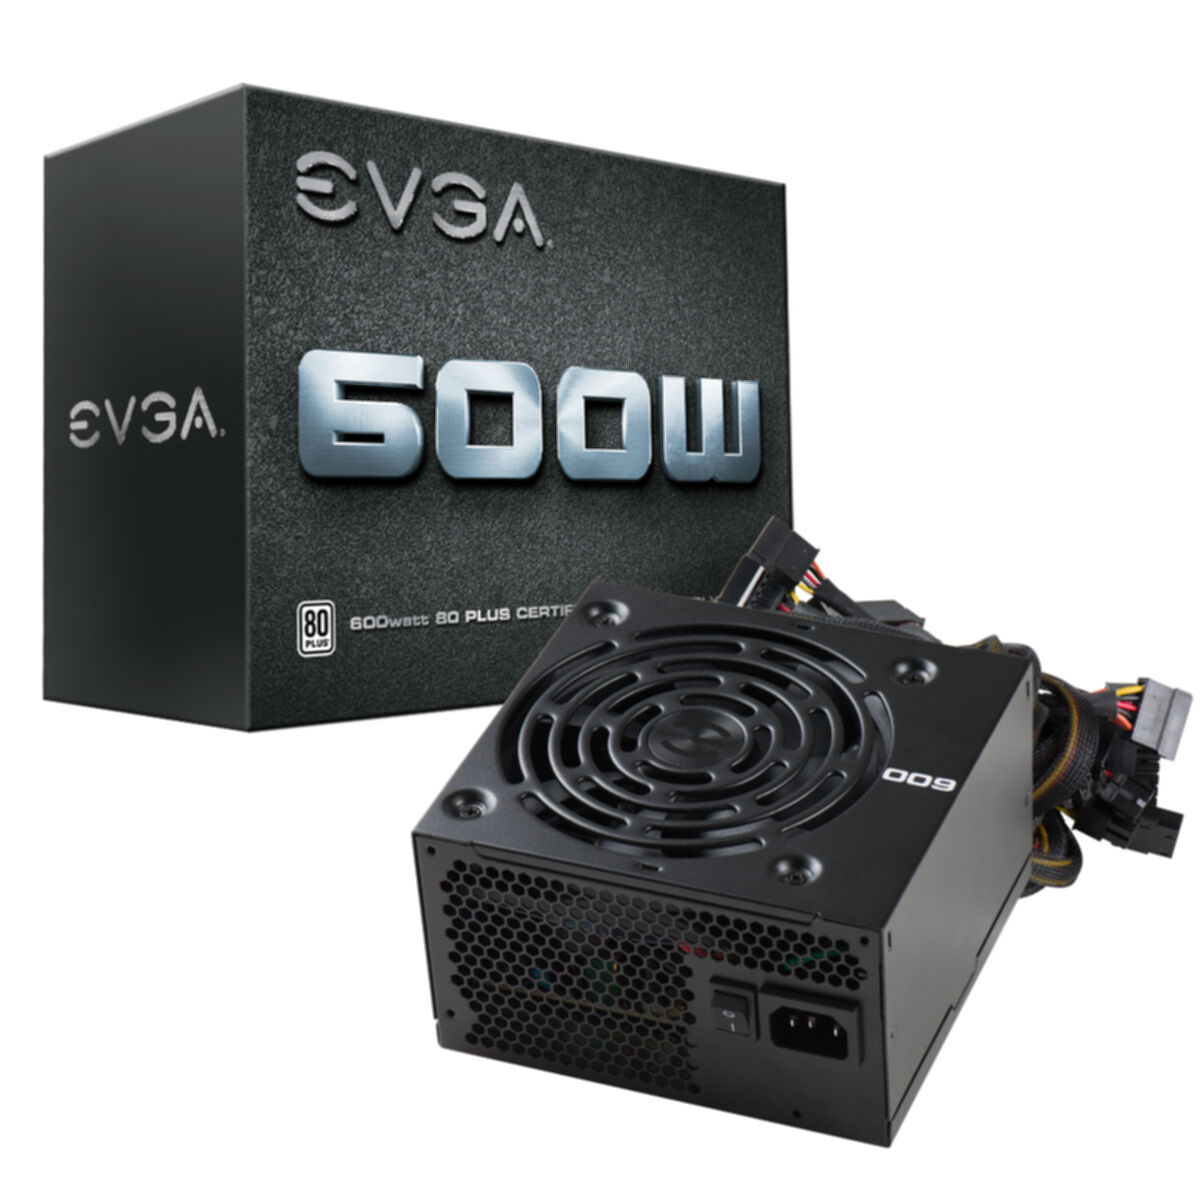 EVGA EVGA 600W PC Netzteil 600 Watt